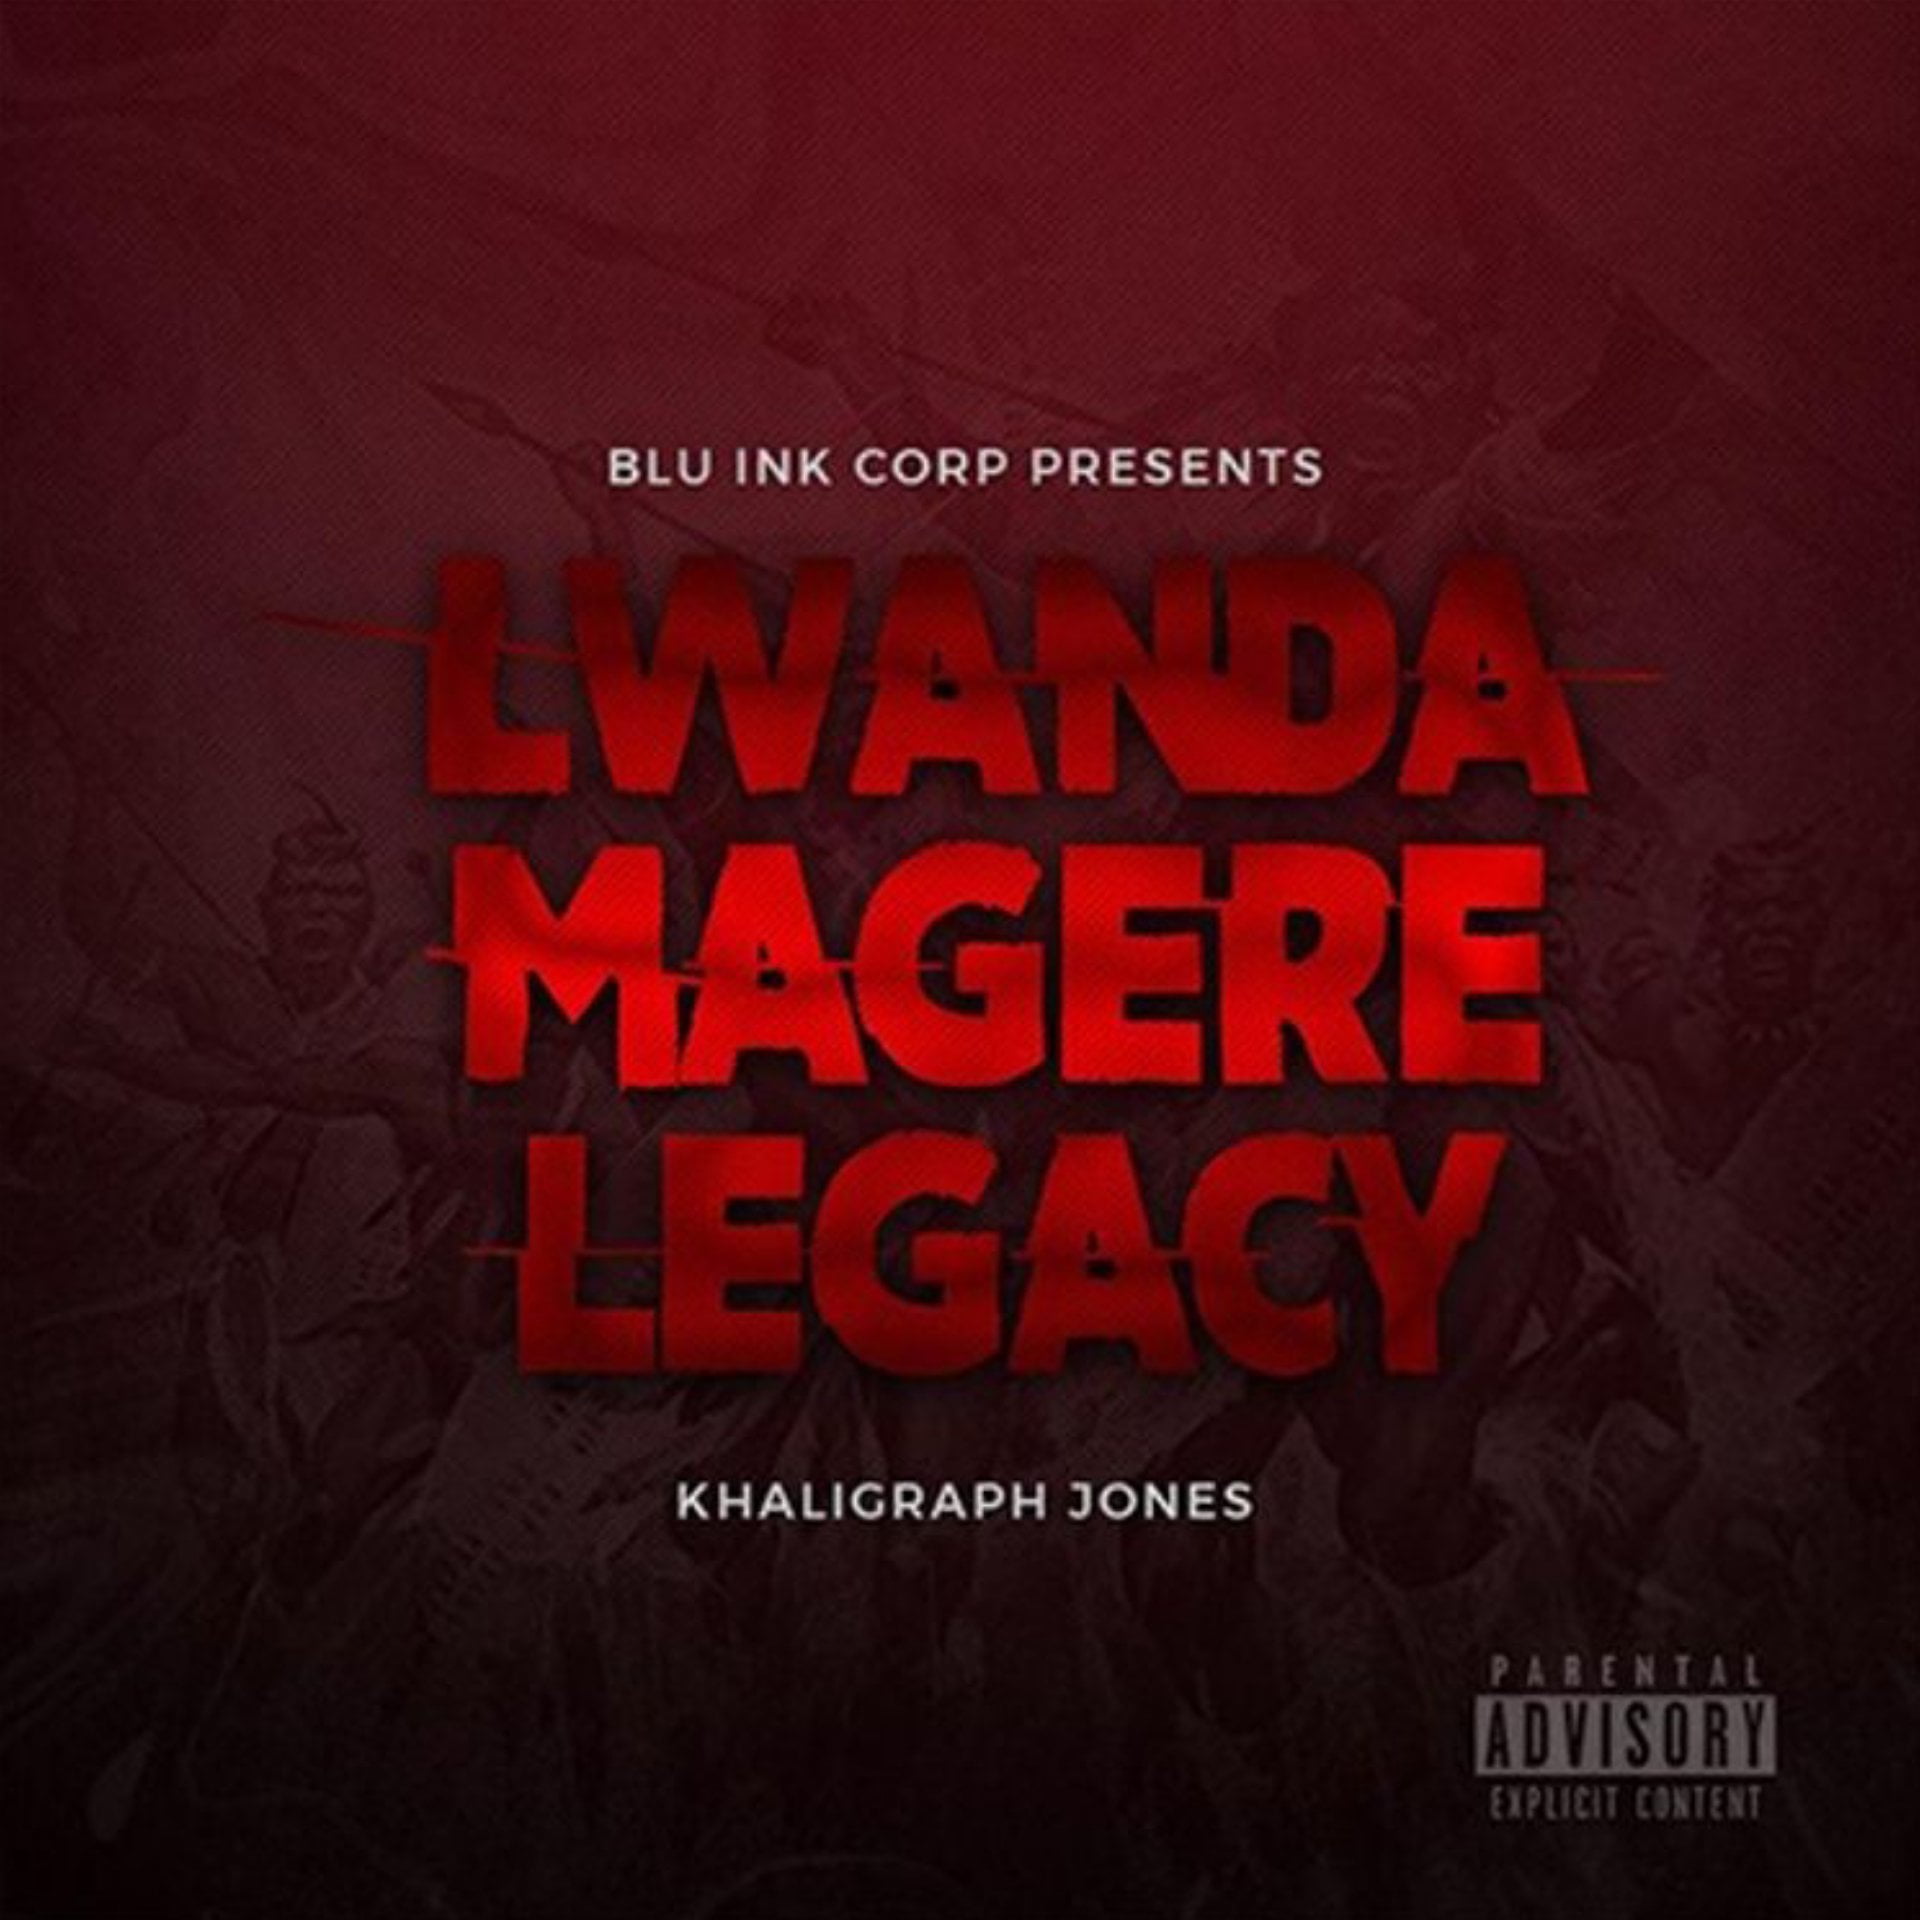 khaligraph jones lwanda magere legacy 1